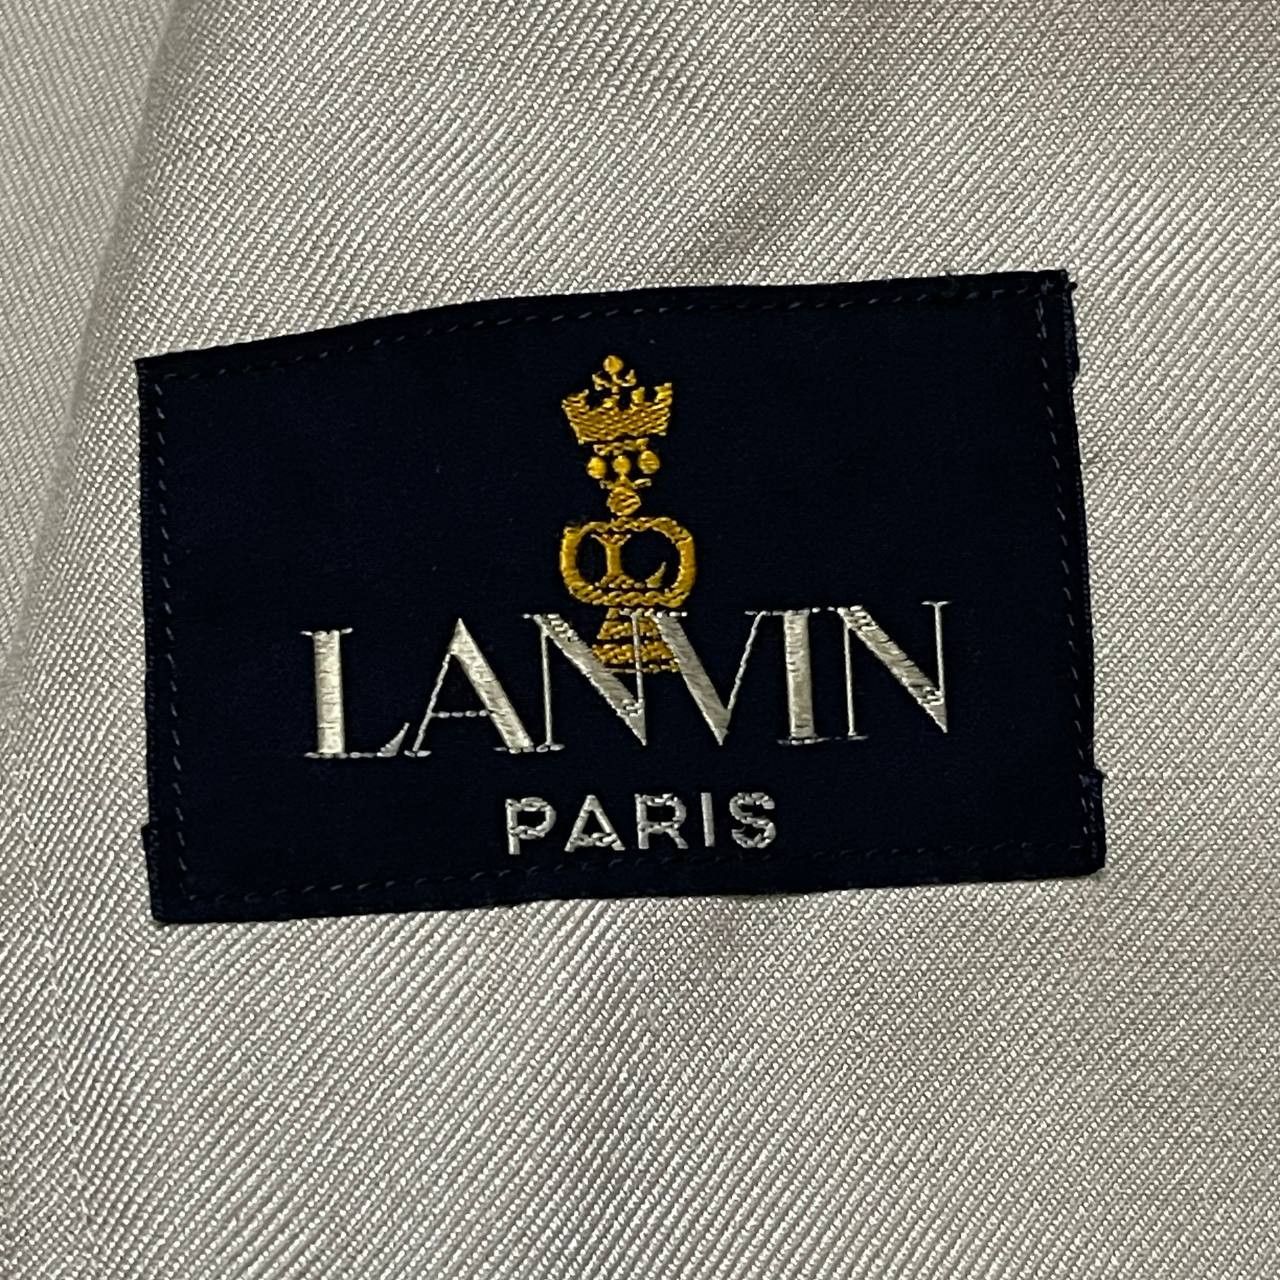 Vintage Lanvin Paris Blazer Coat Jacket - 11